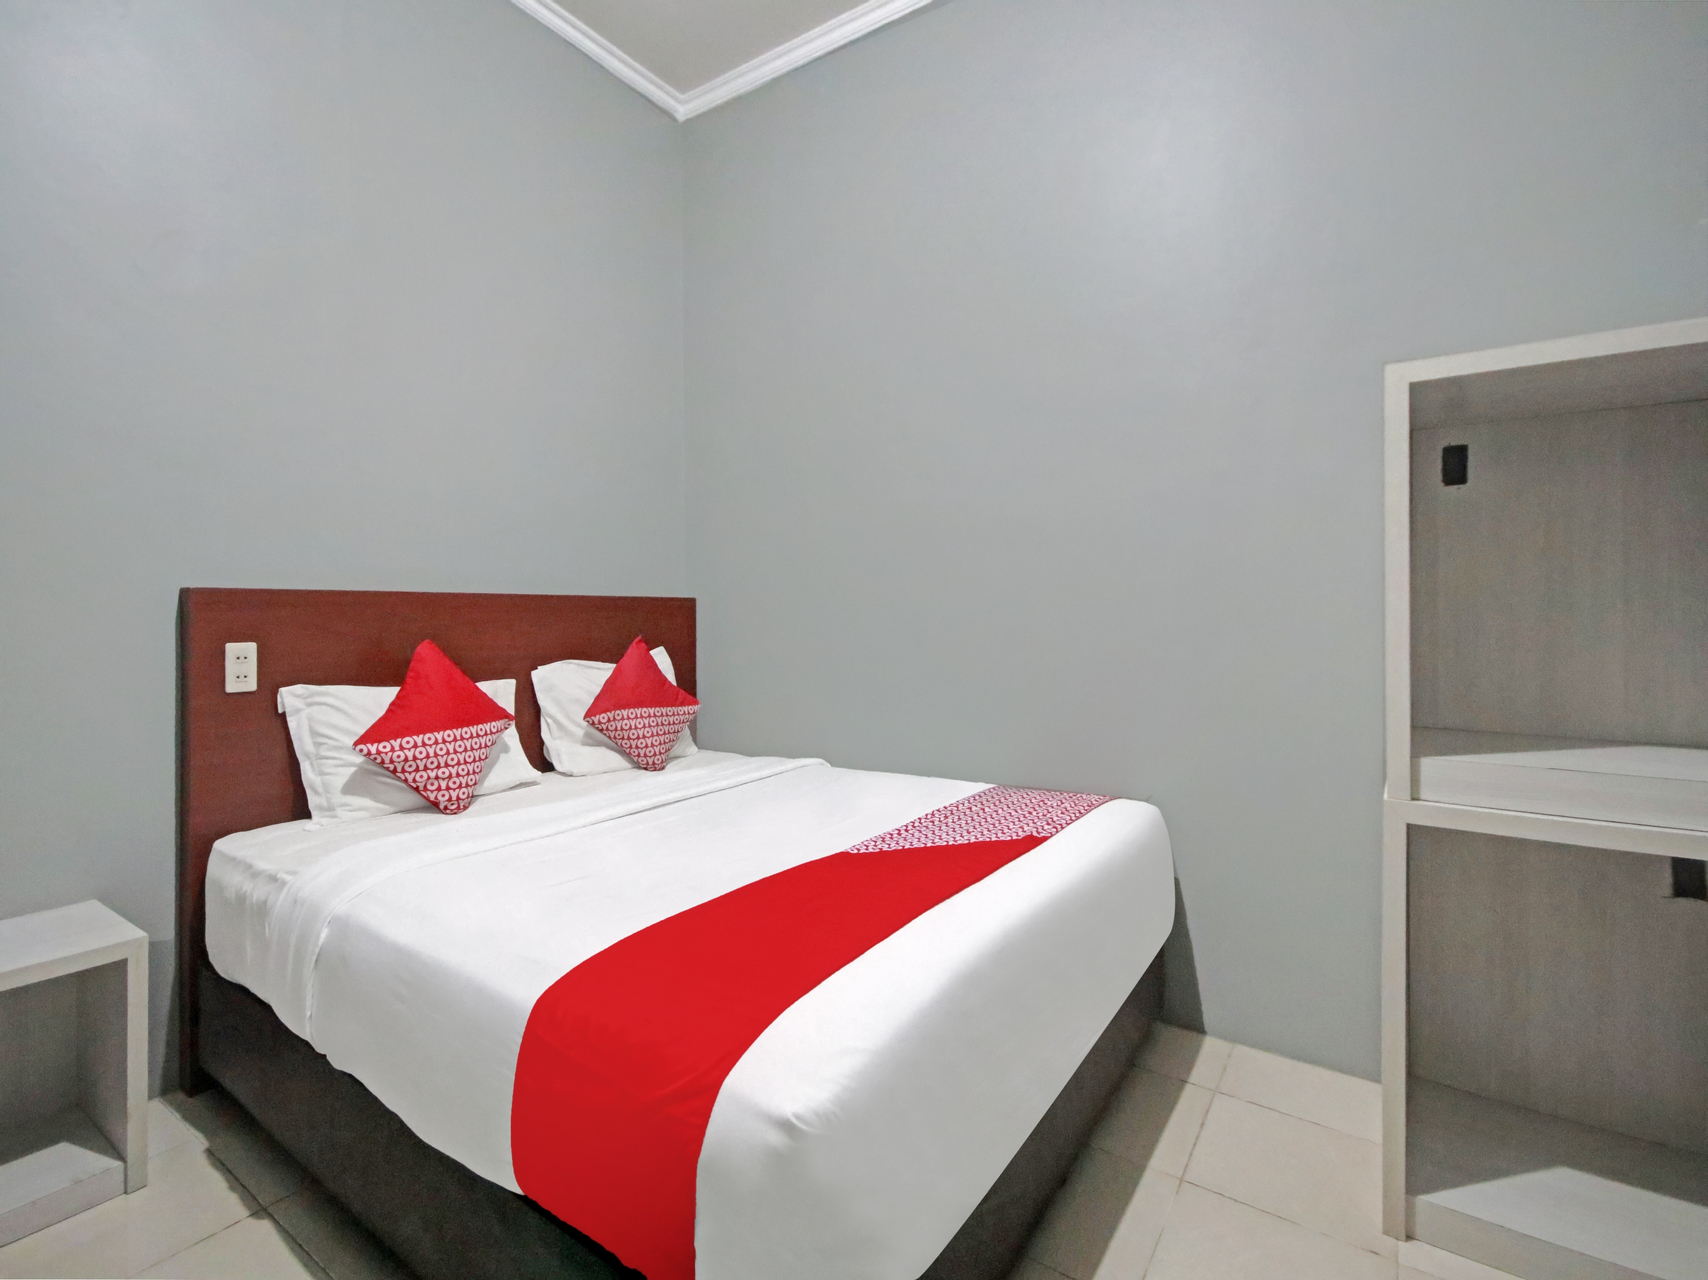 Bedroom 1, OYO 90359 Sbh Residence, Medan